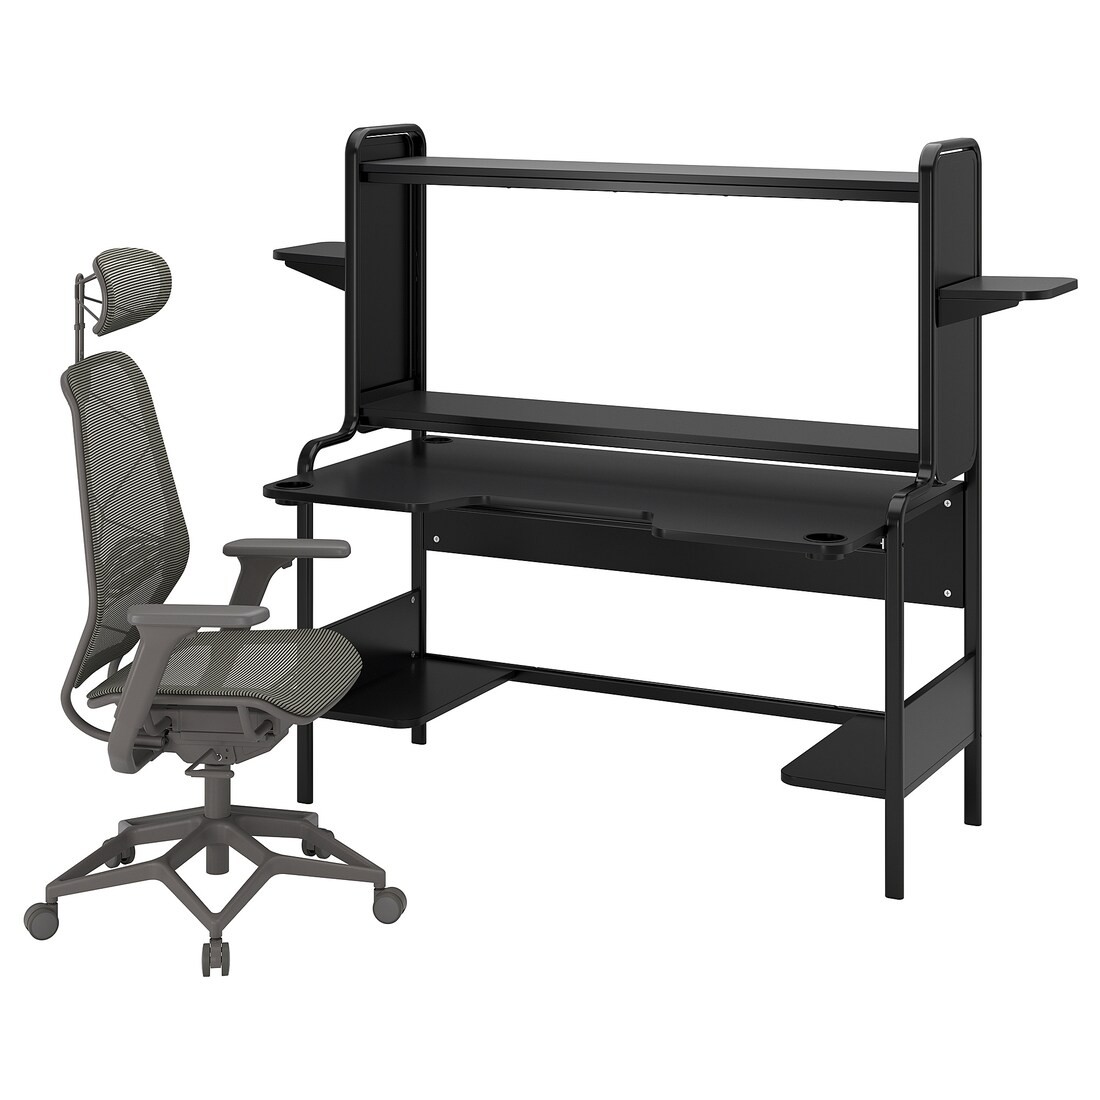 FREDDE / STYRSPEL Геймерский стол и стул, черный / серый